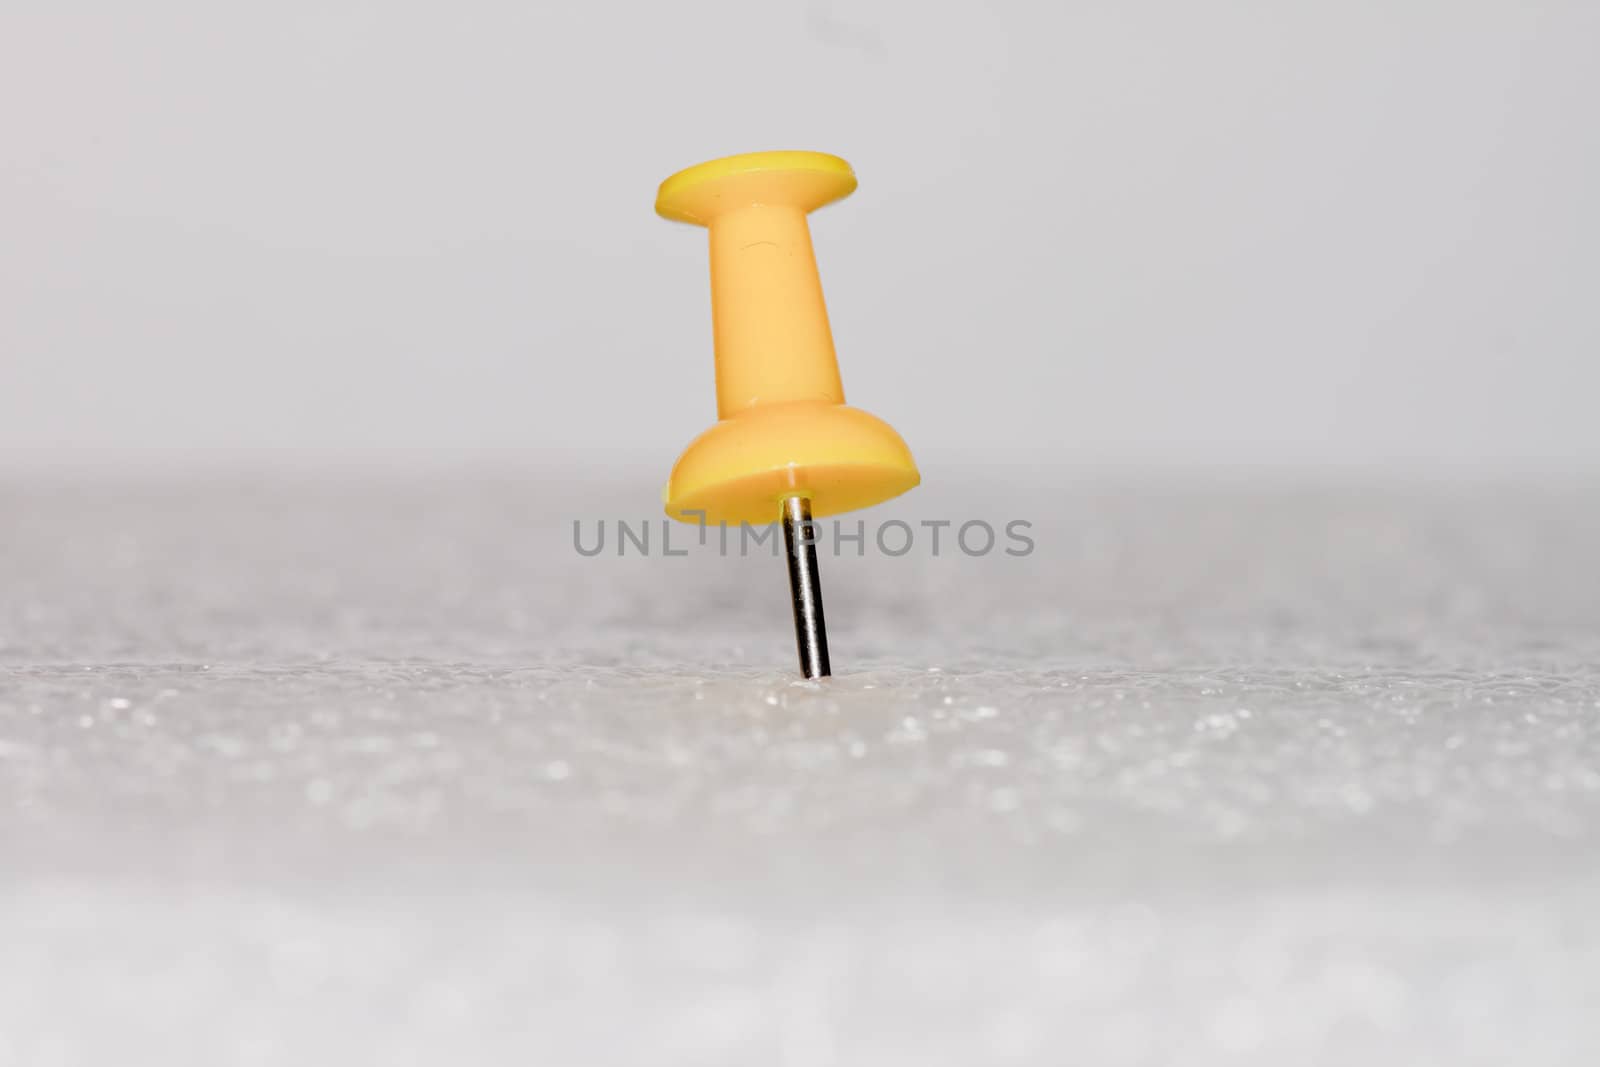 thumbtack isolated on a white background